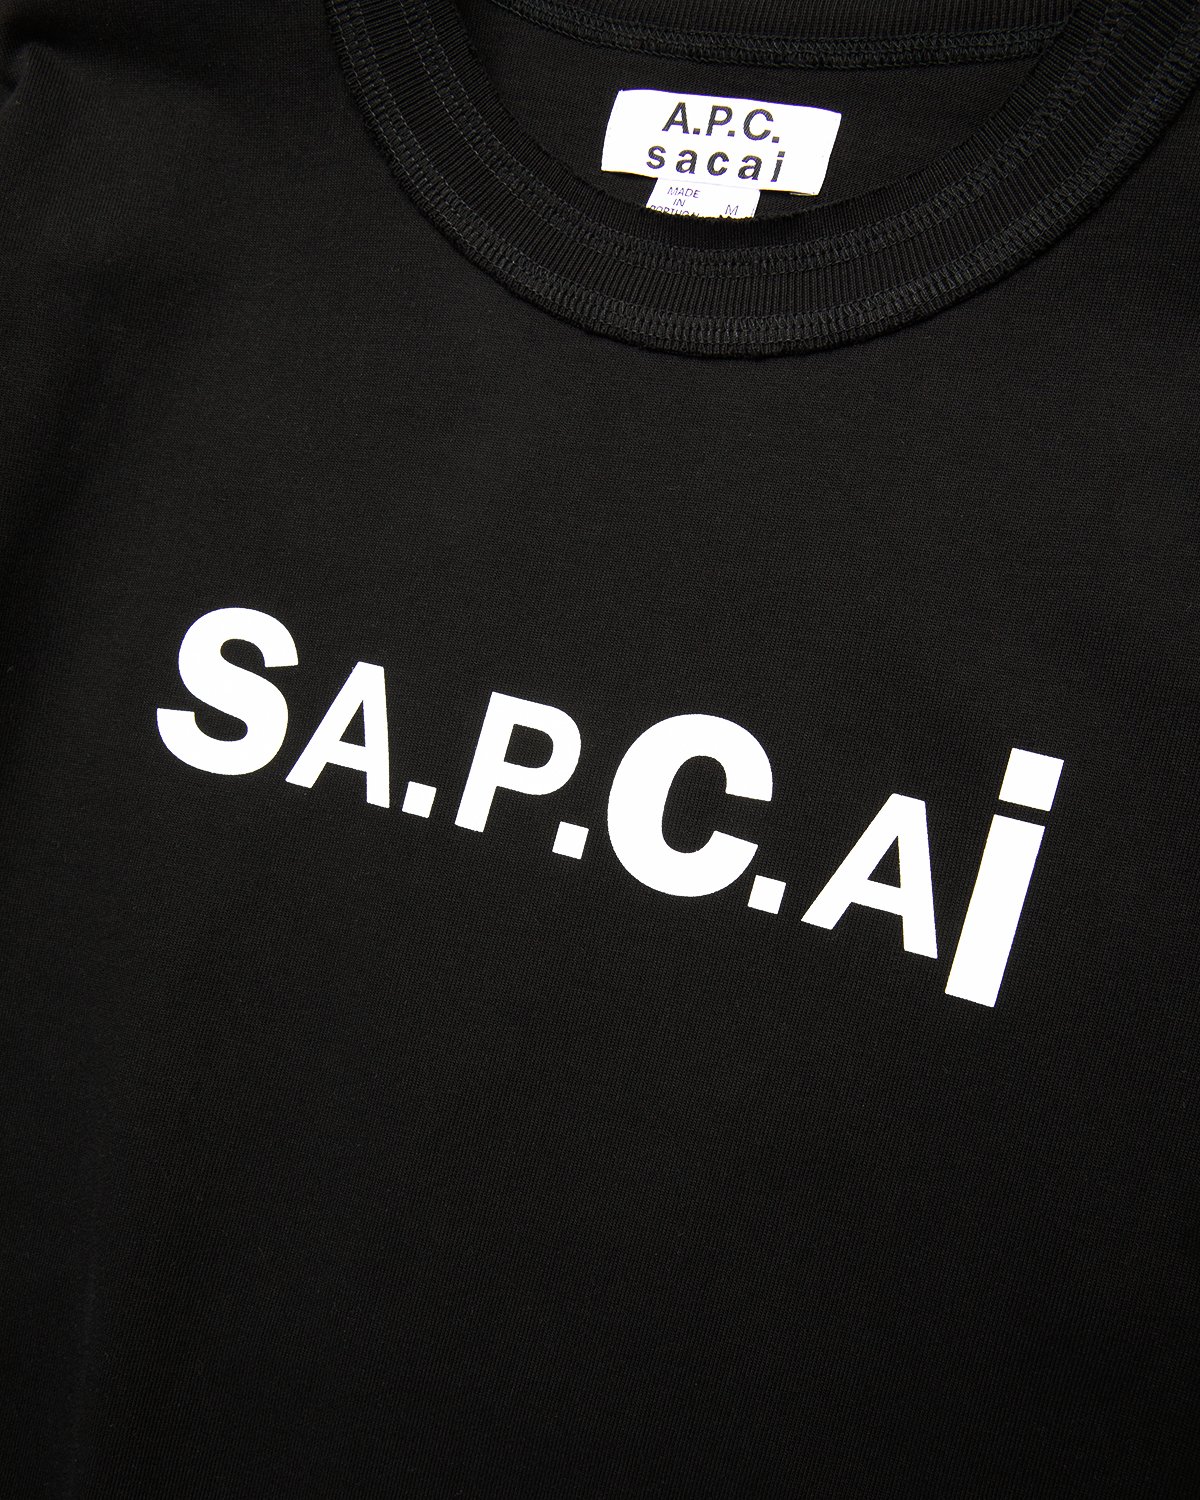 A.P.C. x Sacai - Kiyo T-Shirt Black - Clothing - Black - Image 3